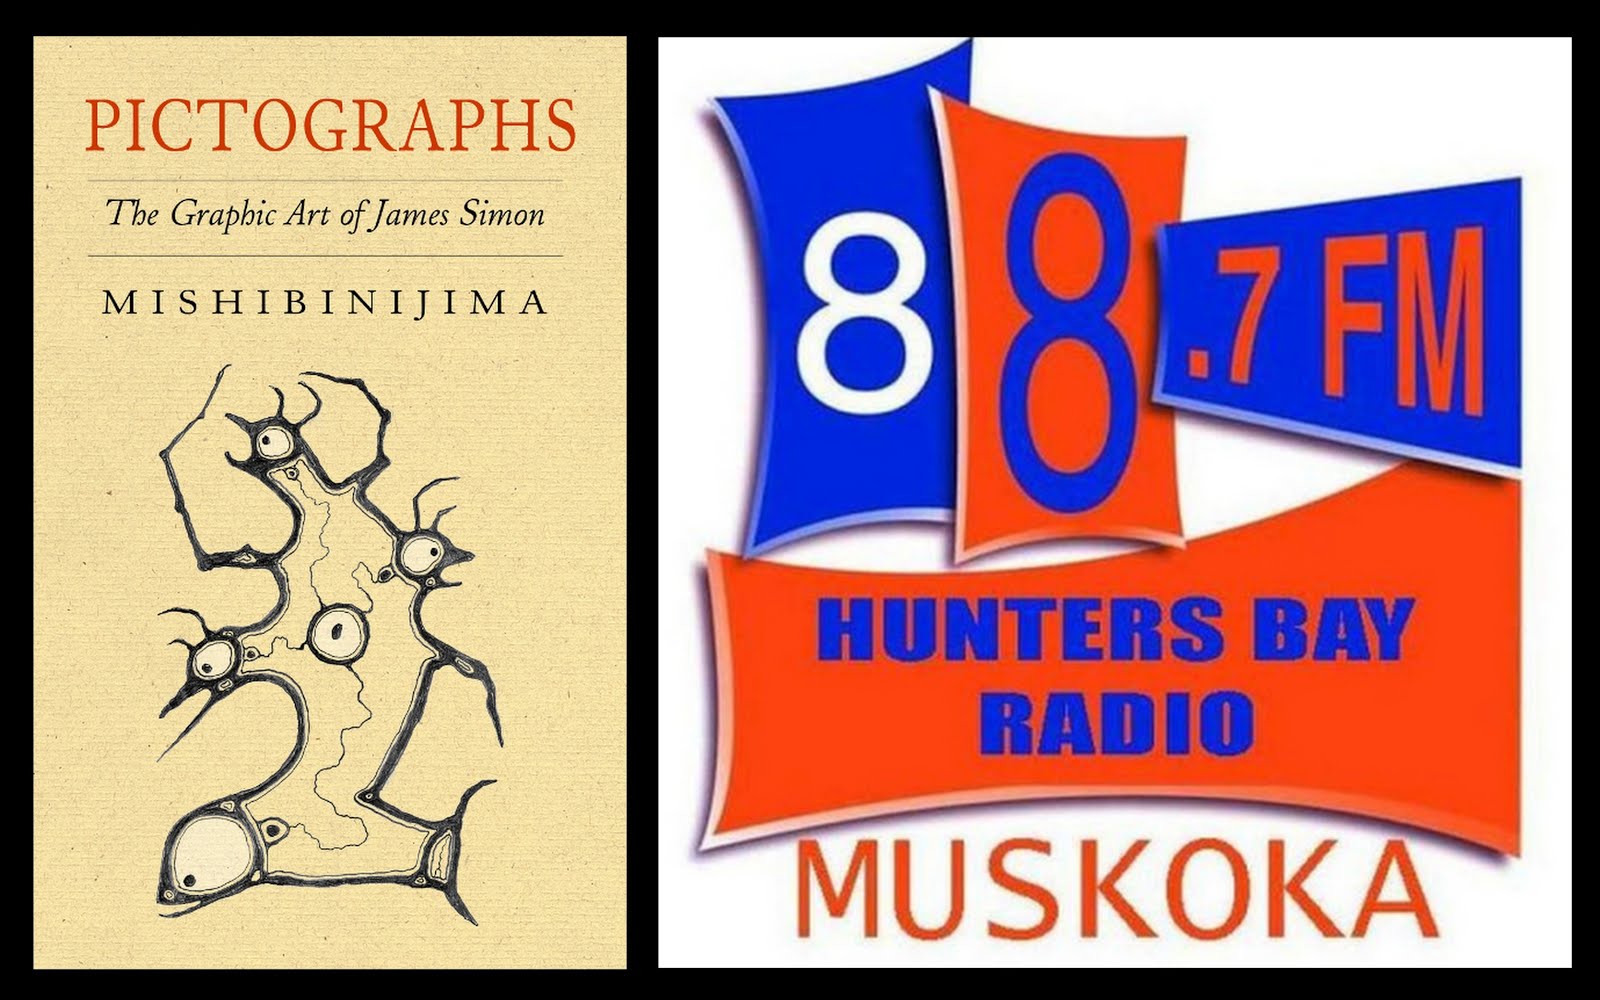 HUNTERS BAY RADIO STATION BOOK INTERVIEW, MUSKOKA, ONTARIO